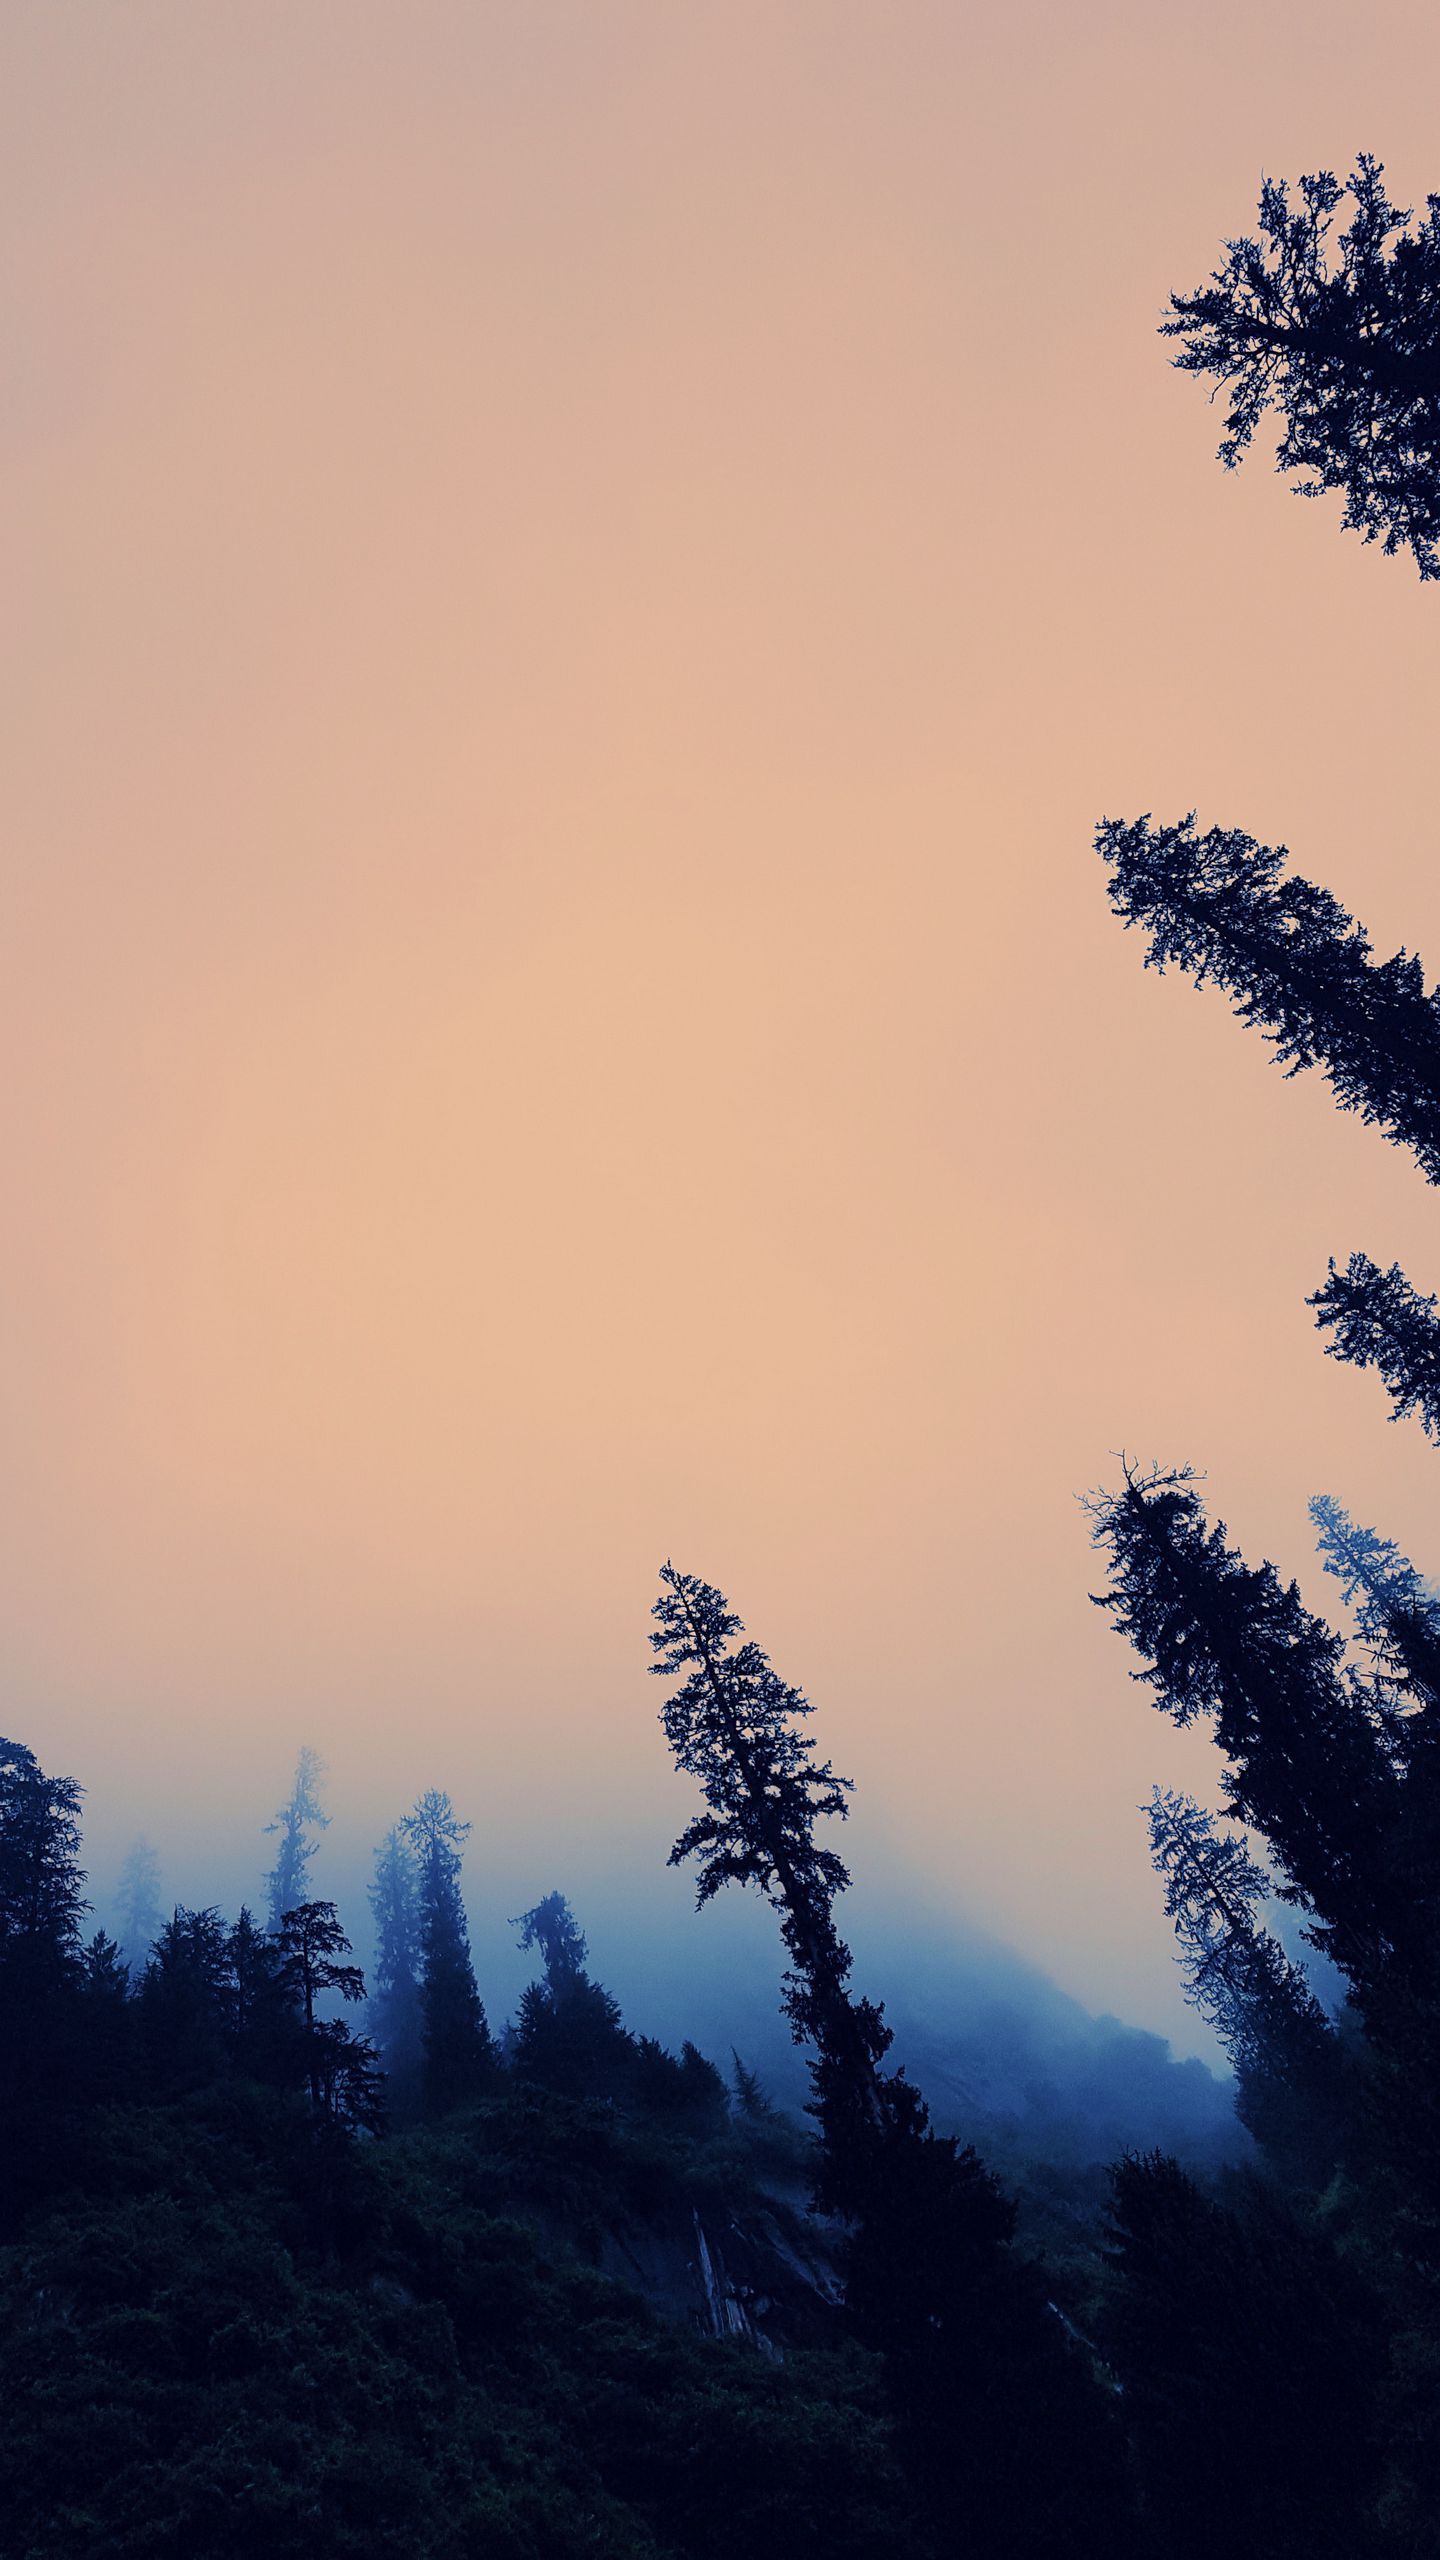 Download wallpaper 1440x2560 trees, fog, bottom view, twilight, sky qhd samsung galaxy s s edge, note, lg g4 HD background